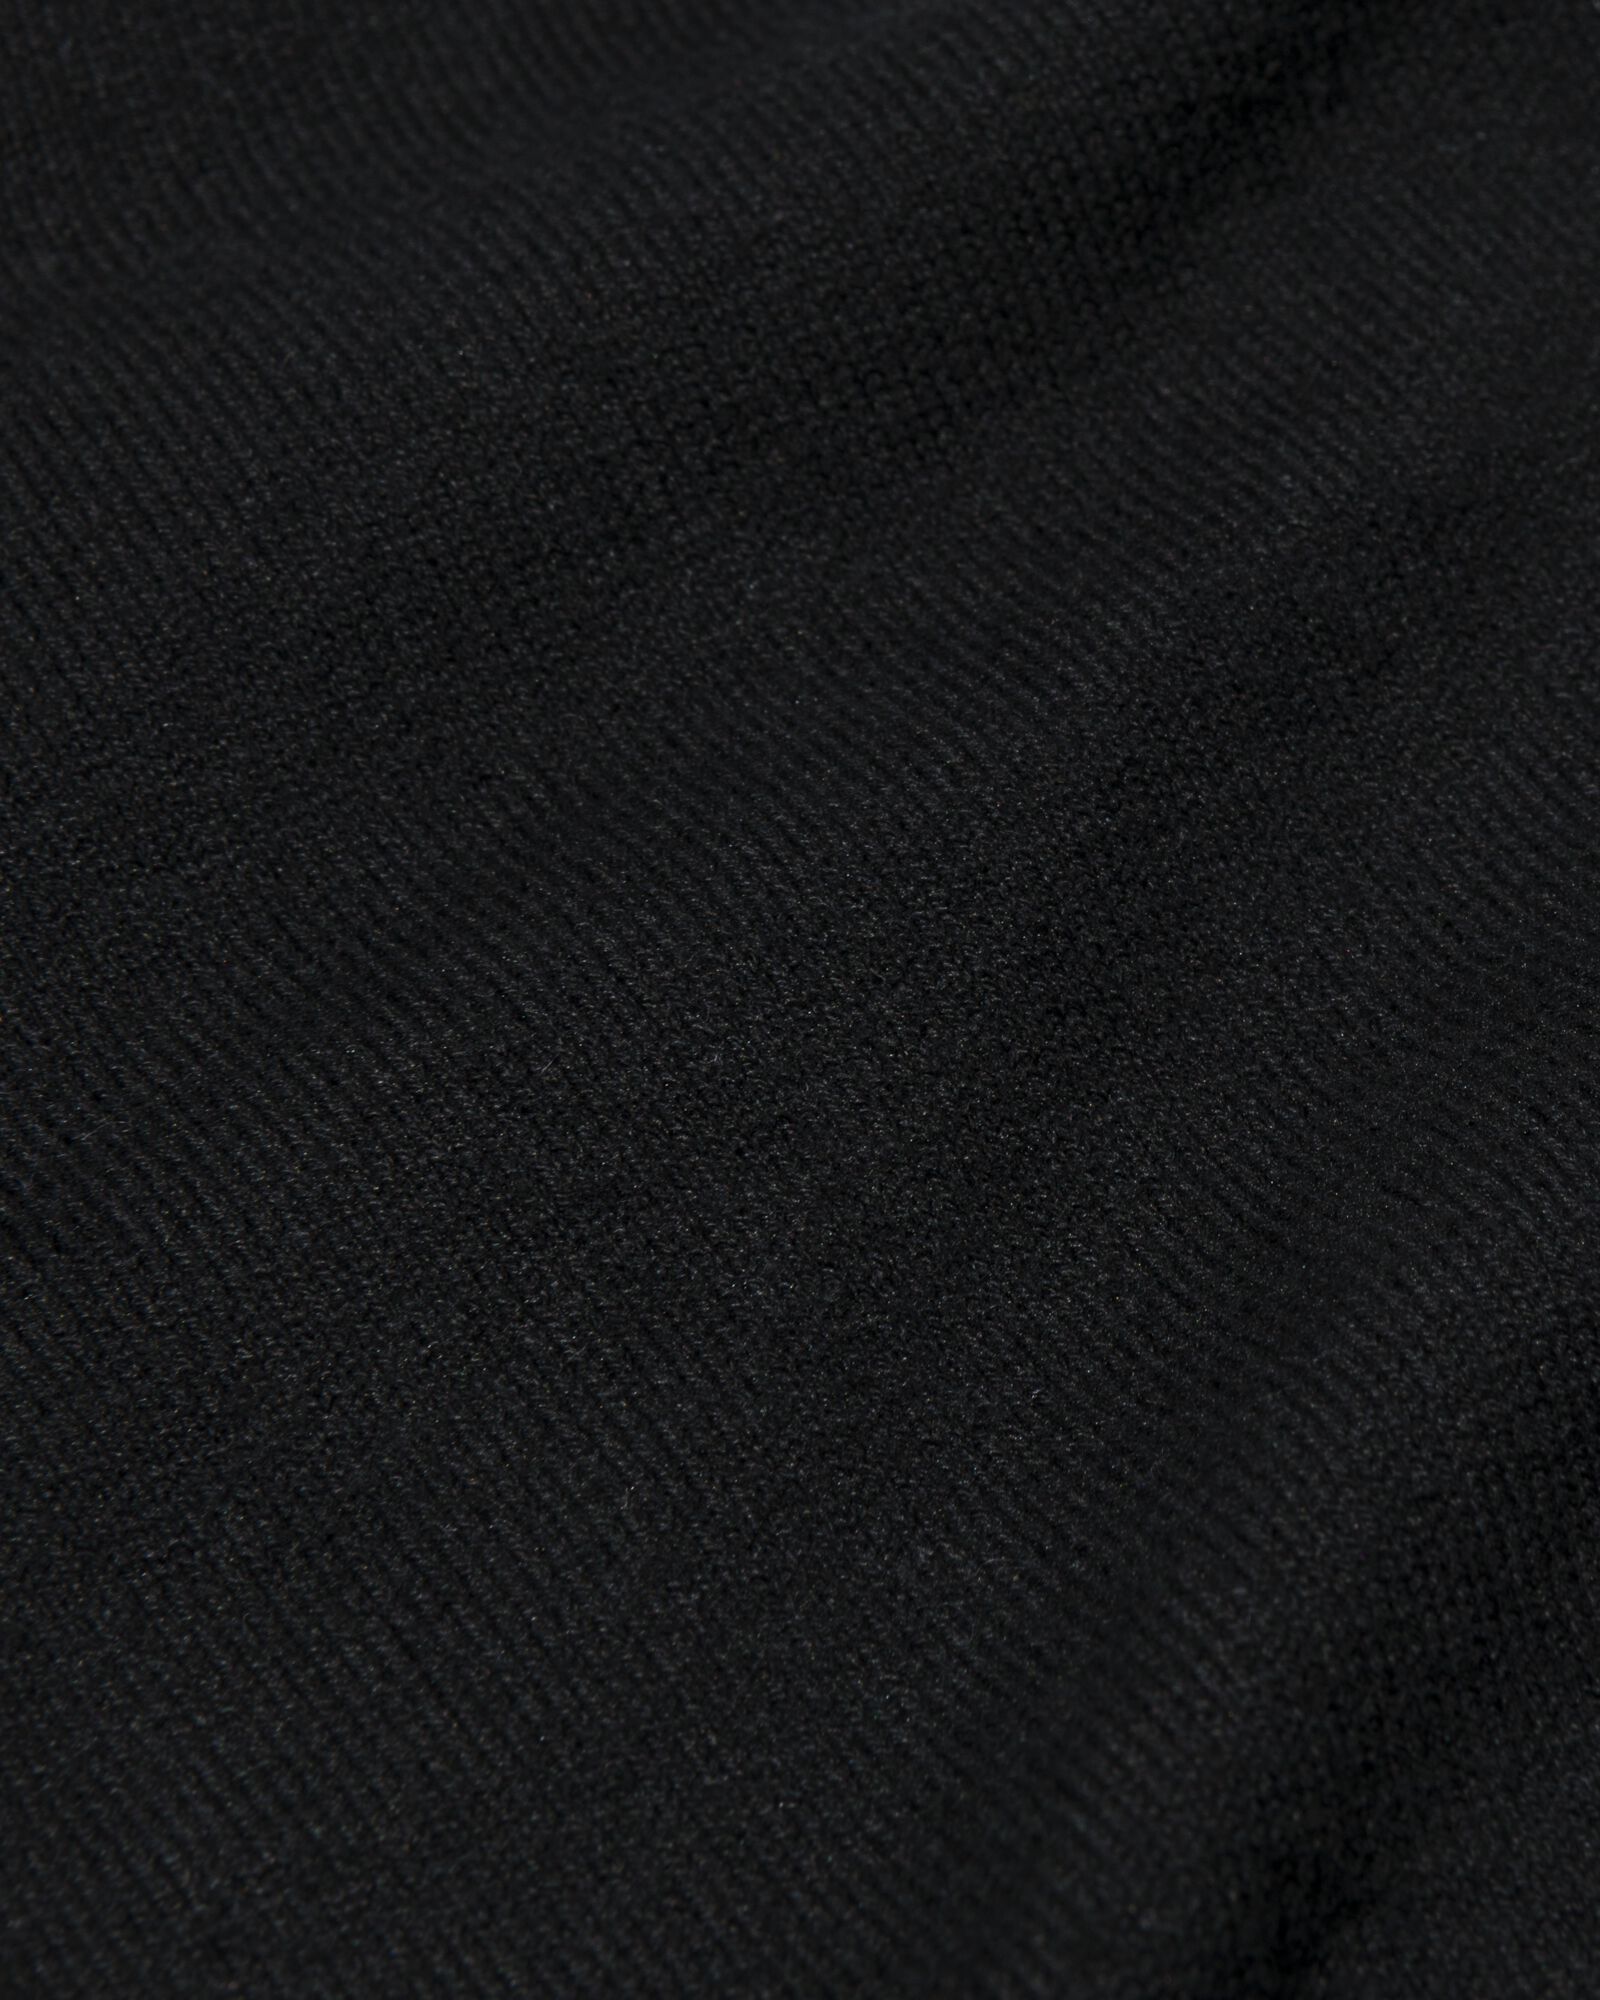 Kinder-Cardigan schwarz schwarz - 1000020542 - HEMA